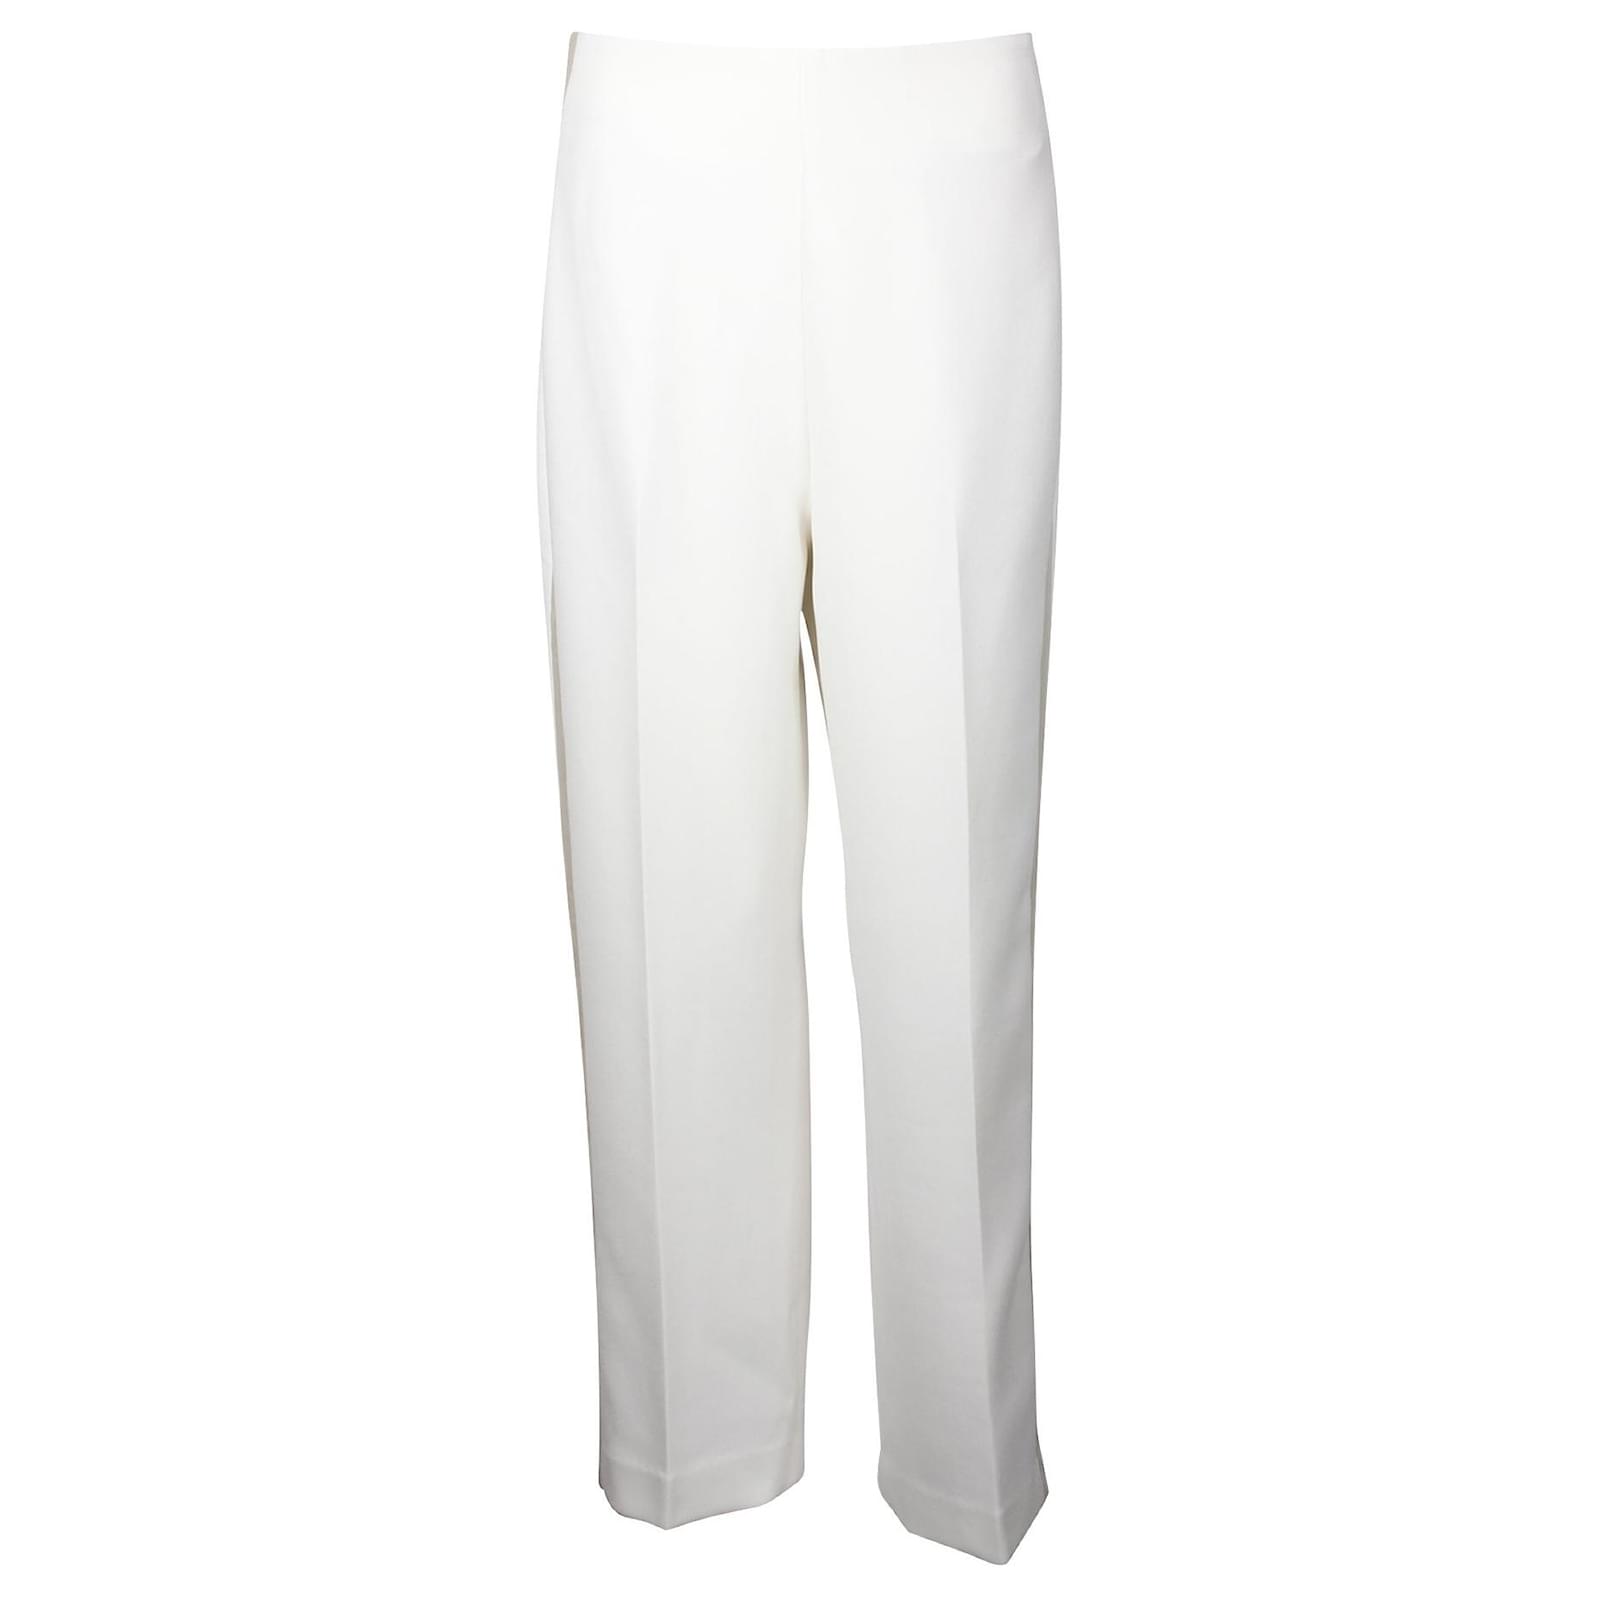 3.1 Phillip Lim Elegantes pantalones color crema claro de talle